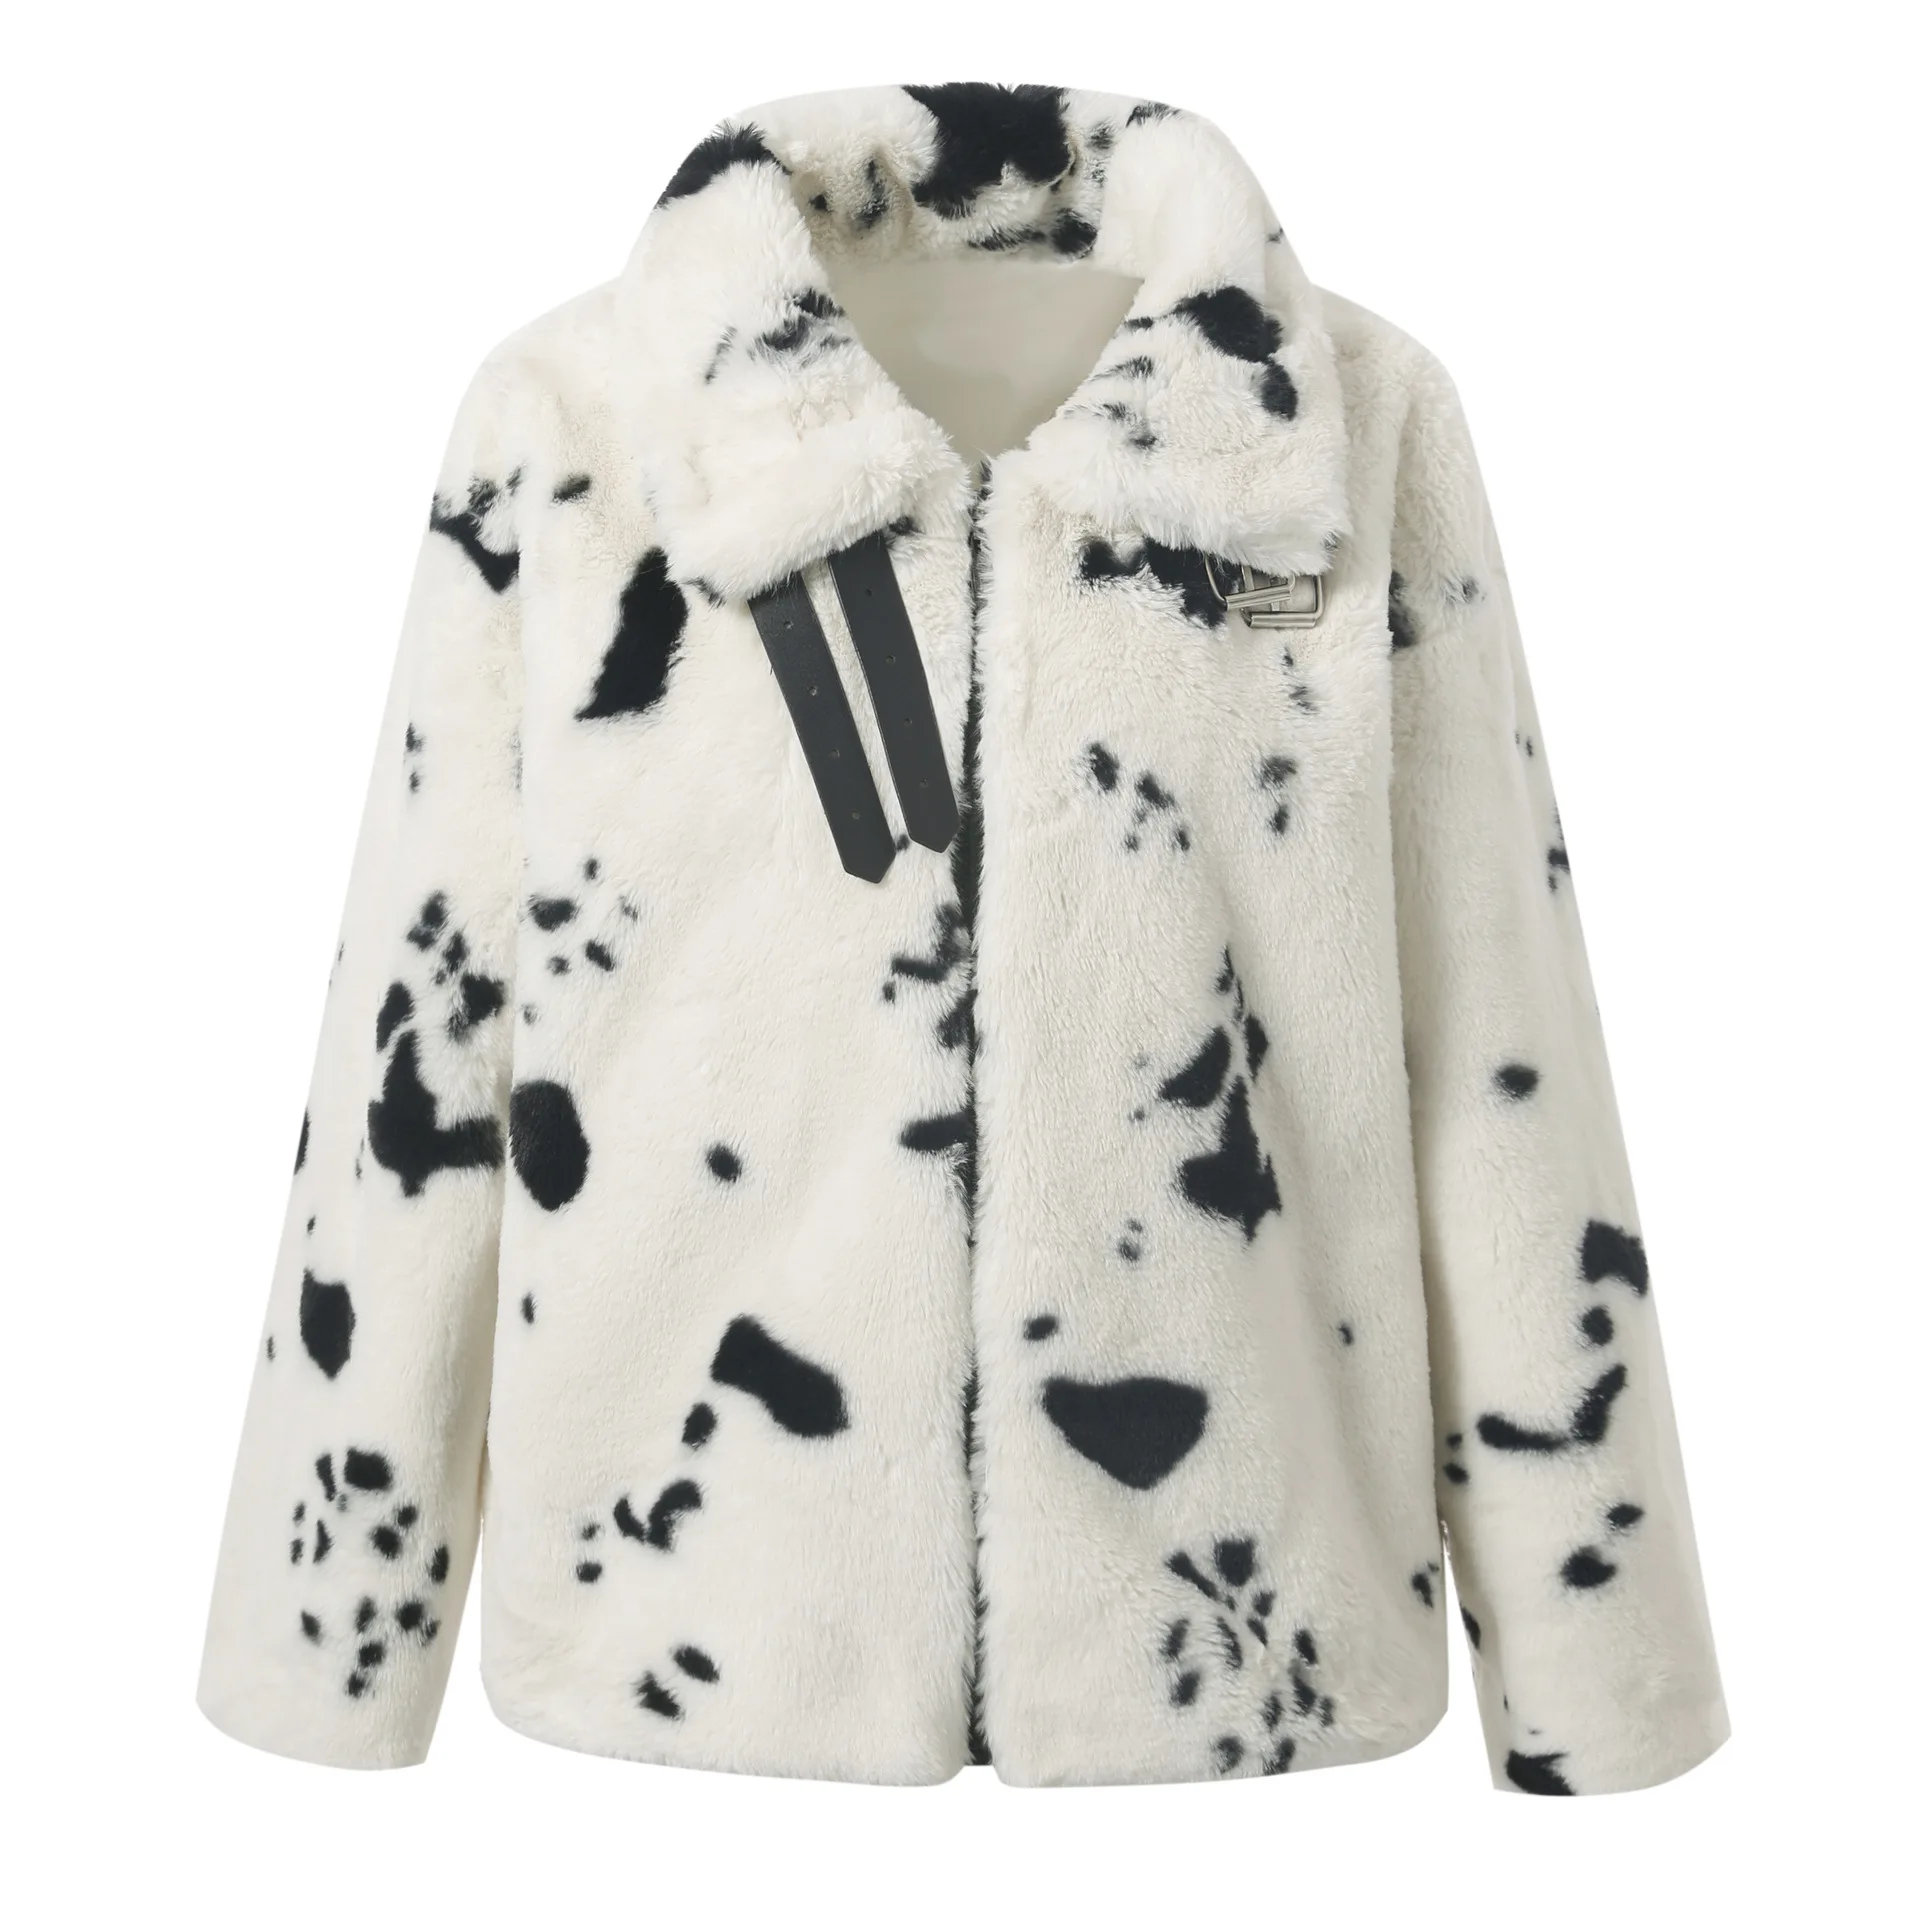 Collar Plush Coat 2021 Wool-like Coat Warm Winter Women Fur Coat Thickened Women's Clothing